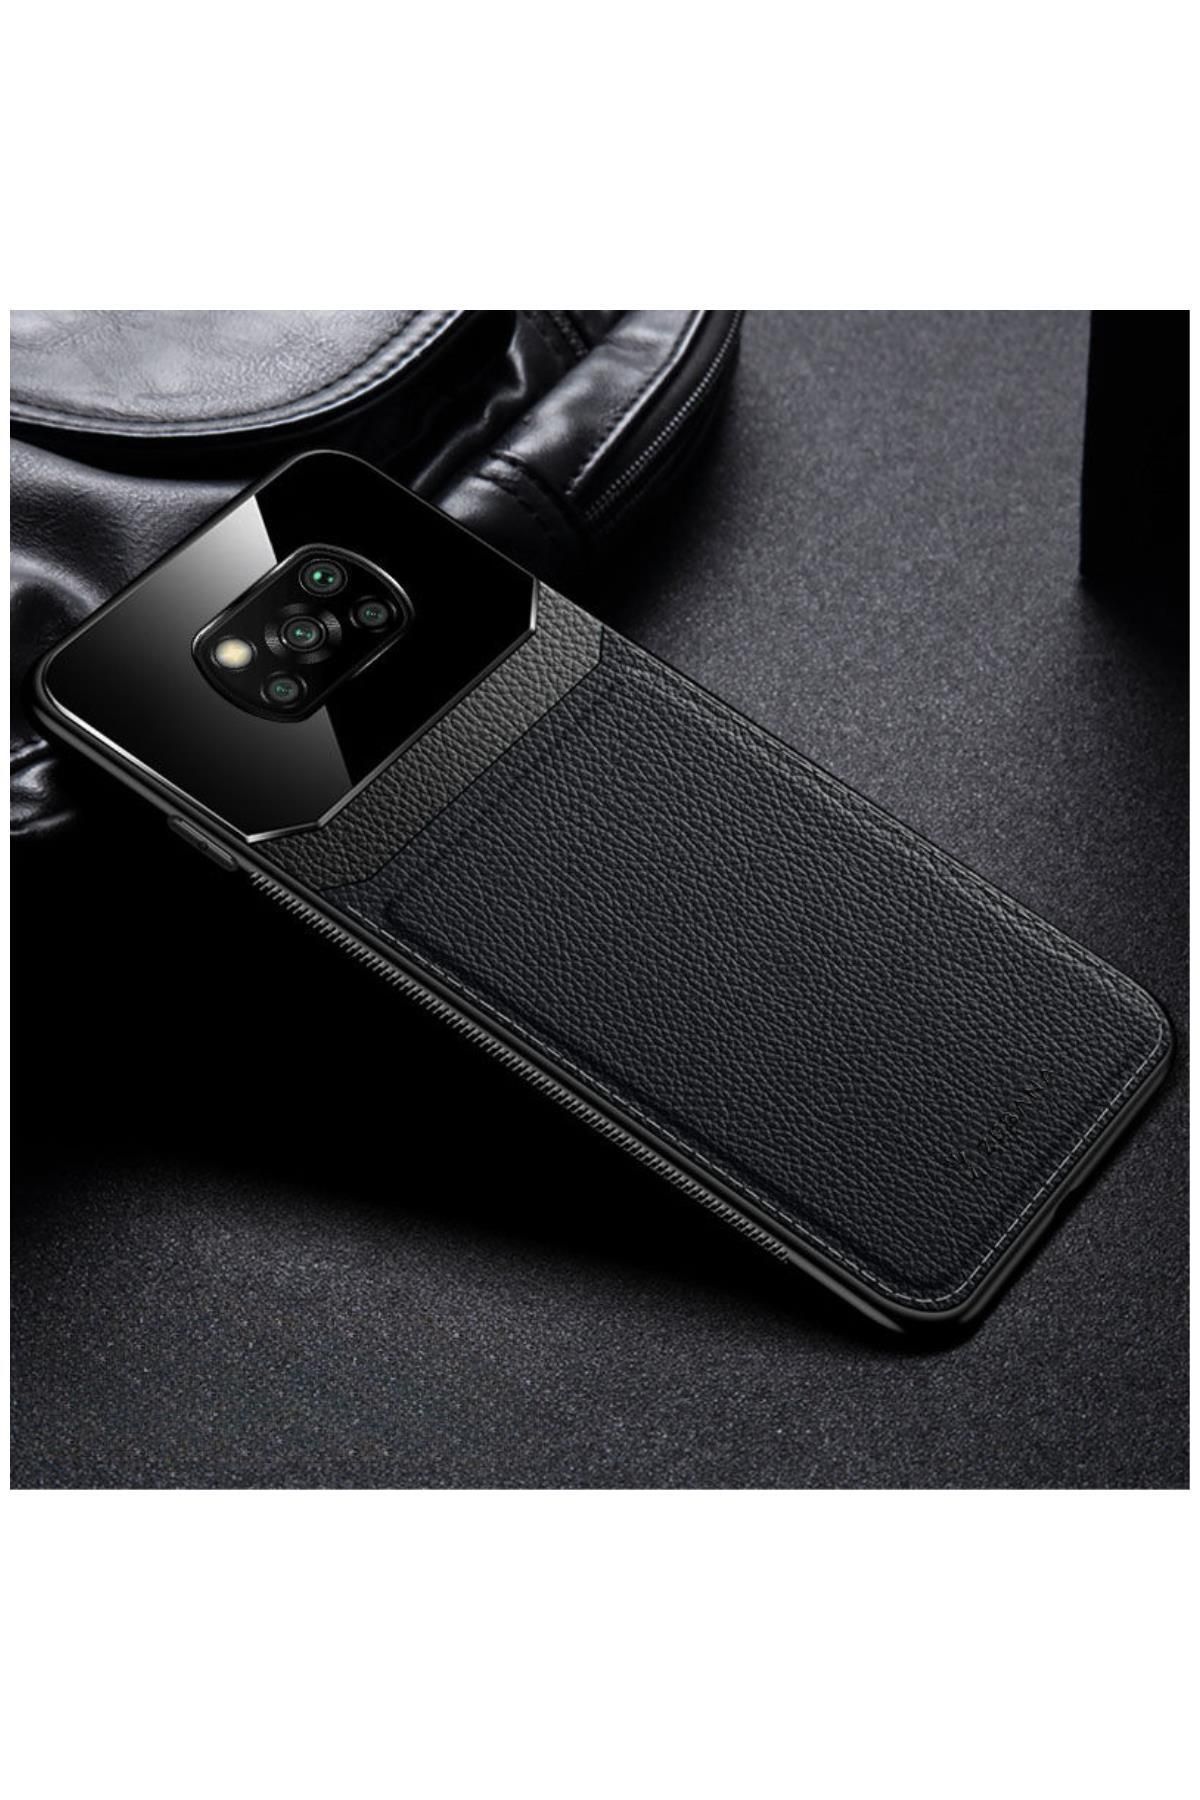 Zebana Xiaomi Poco X3 Pro Uyumlu Kılıf Lens Deri Kılıf Siyah